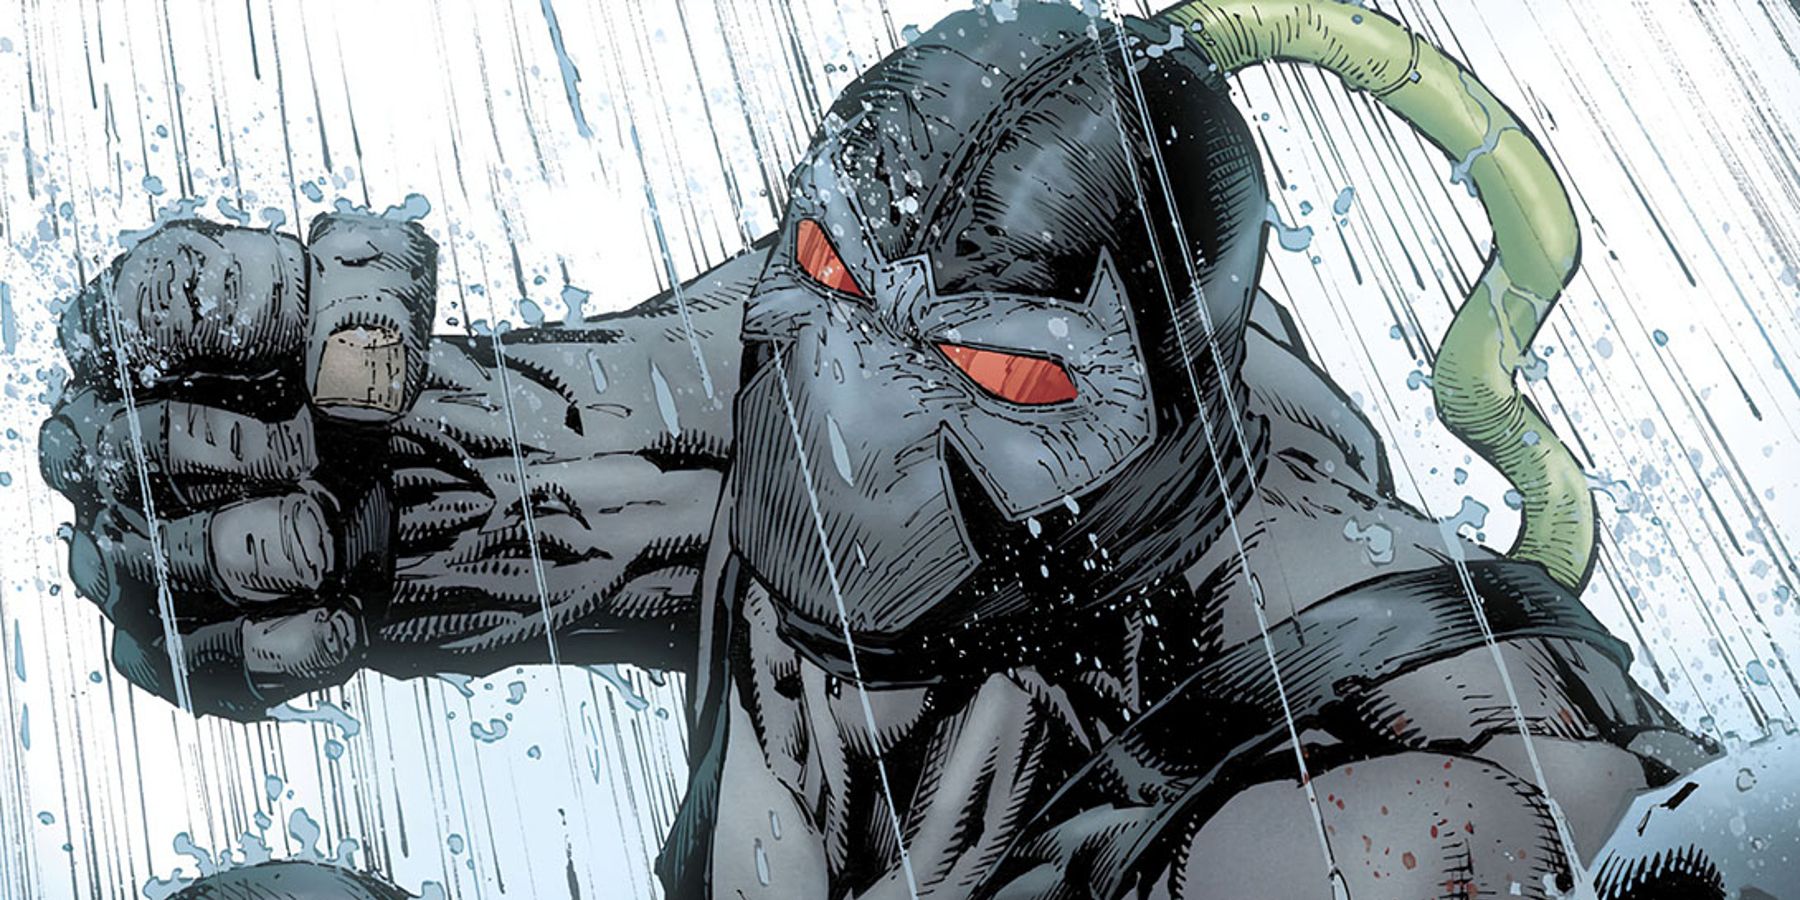 Bane battling Batman in the rain in Batman comics